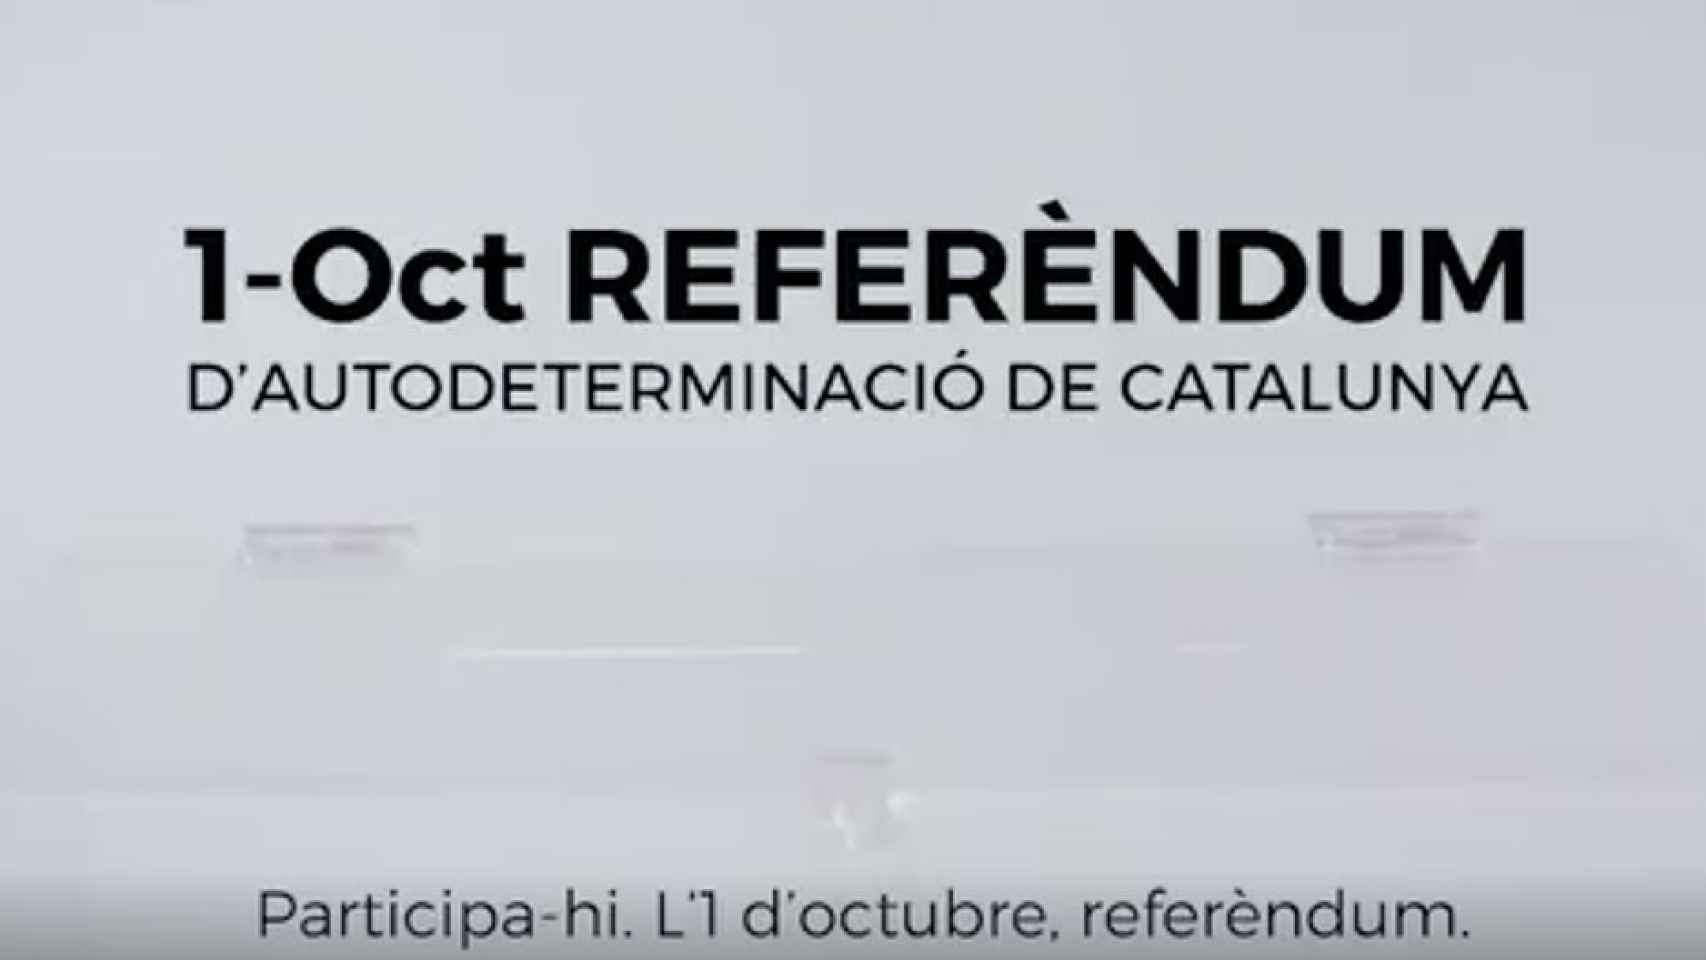 La Generalitat lanza el spot ampliado en el que anima a participar en el referéndum